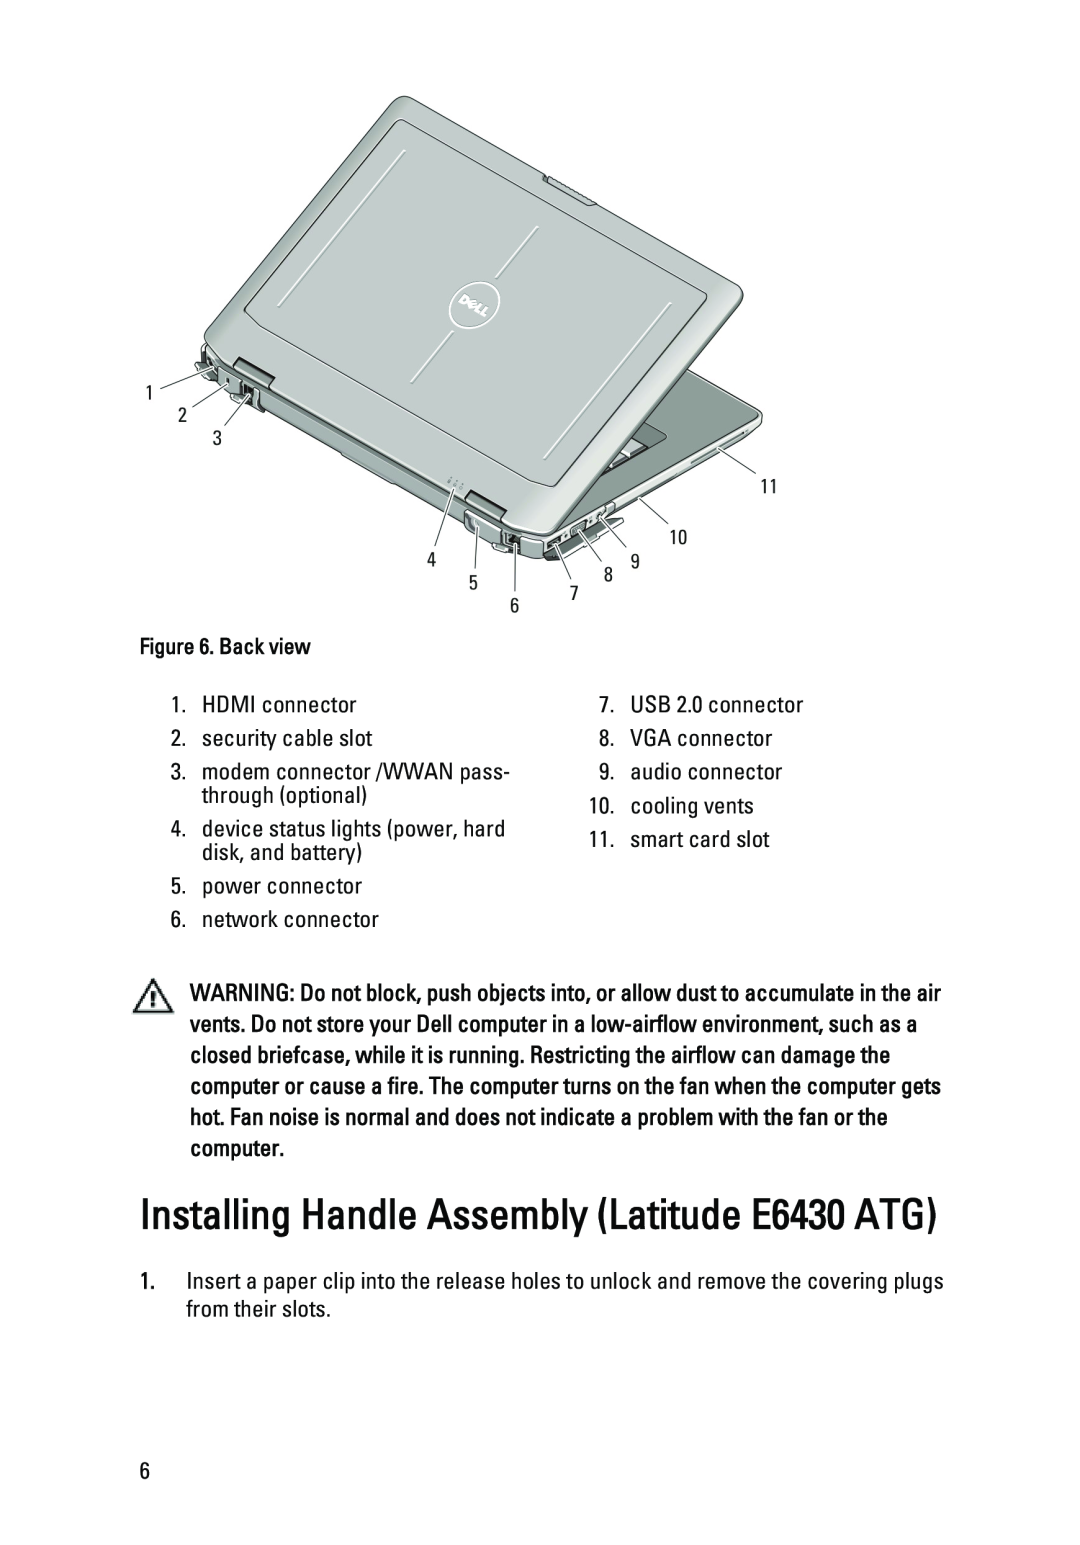 Dell E6530 manual Installing Handle Assembly Latitude E6430 ATG 